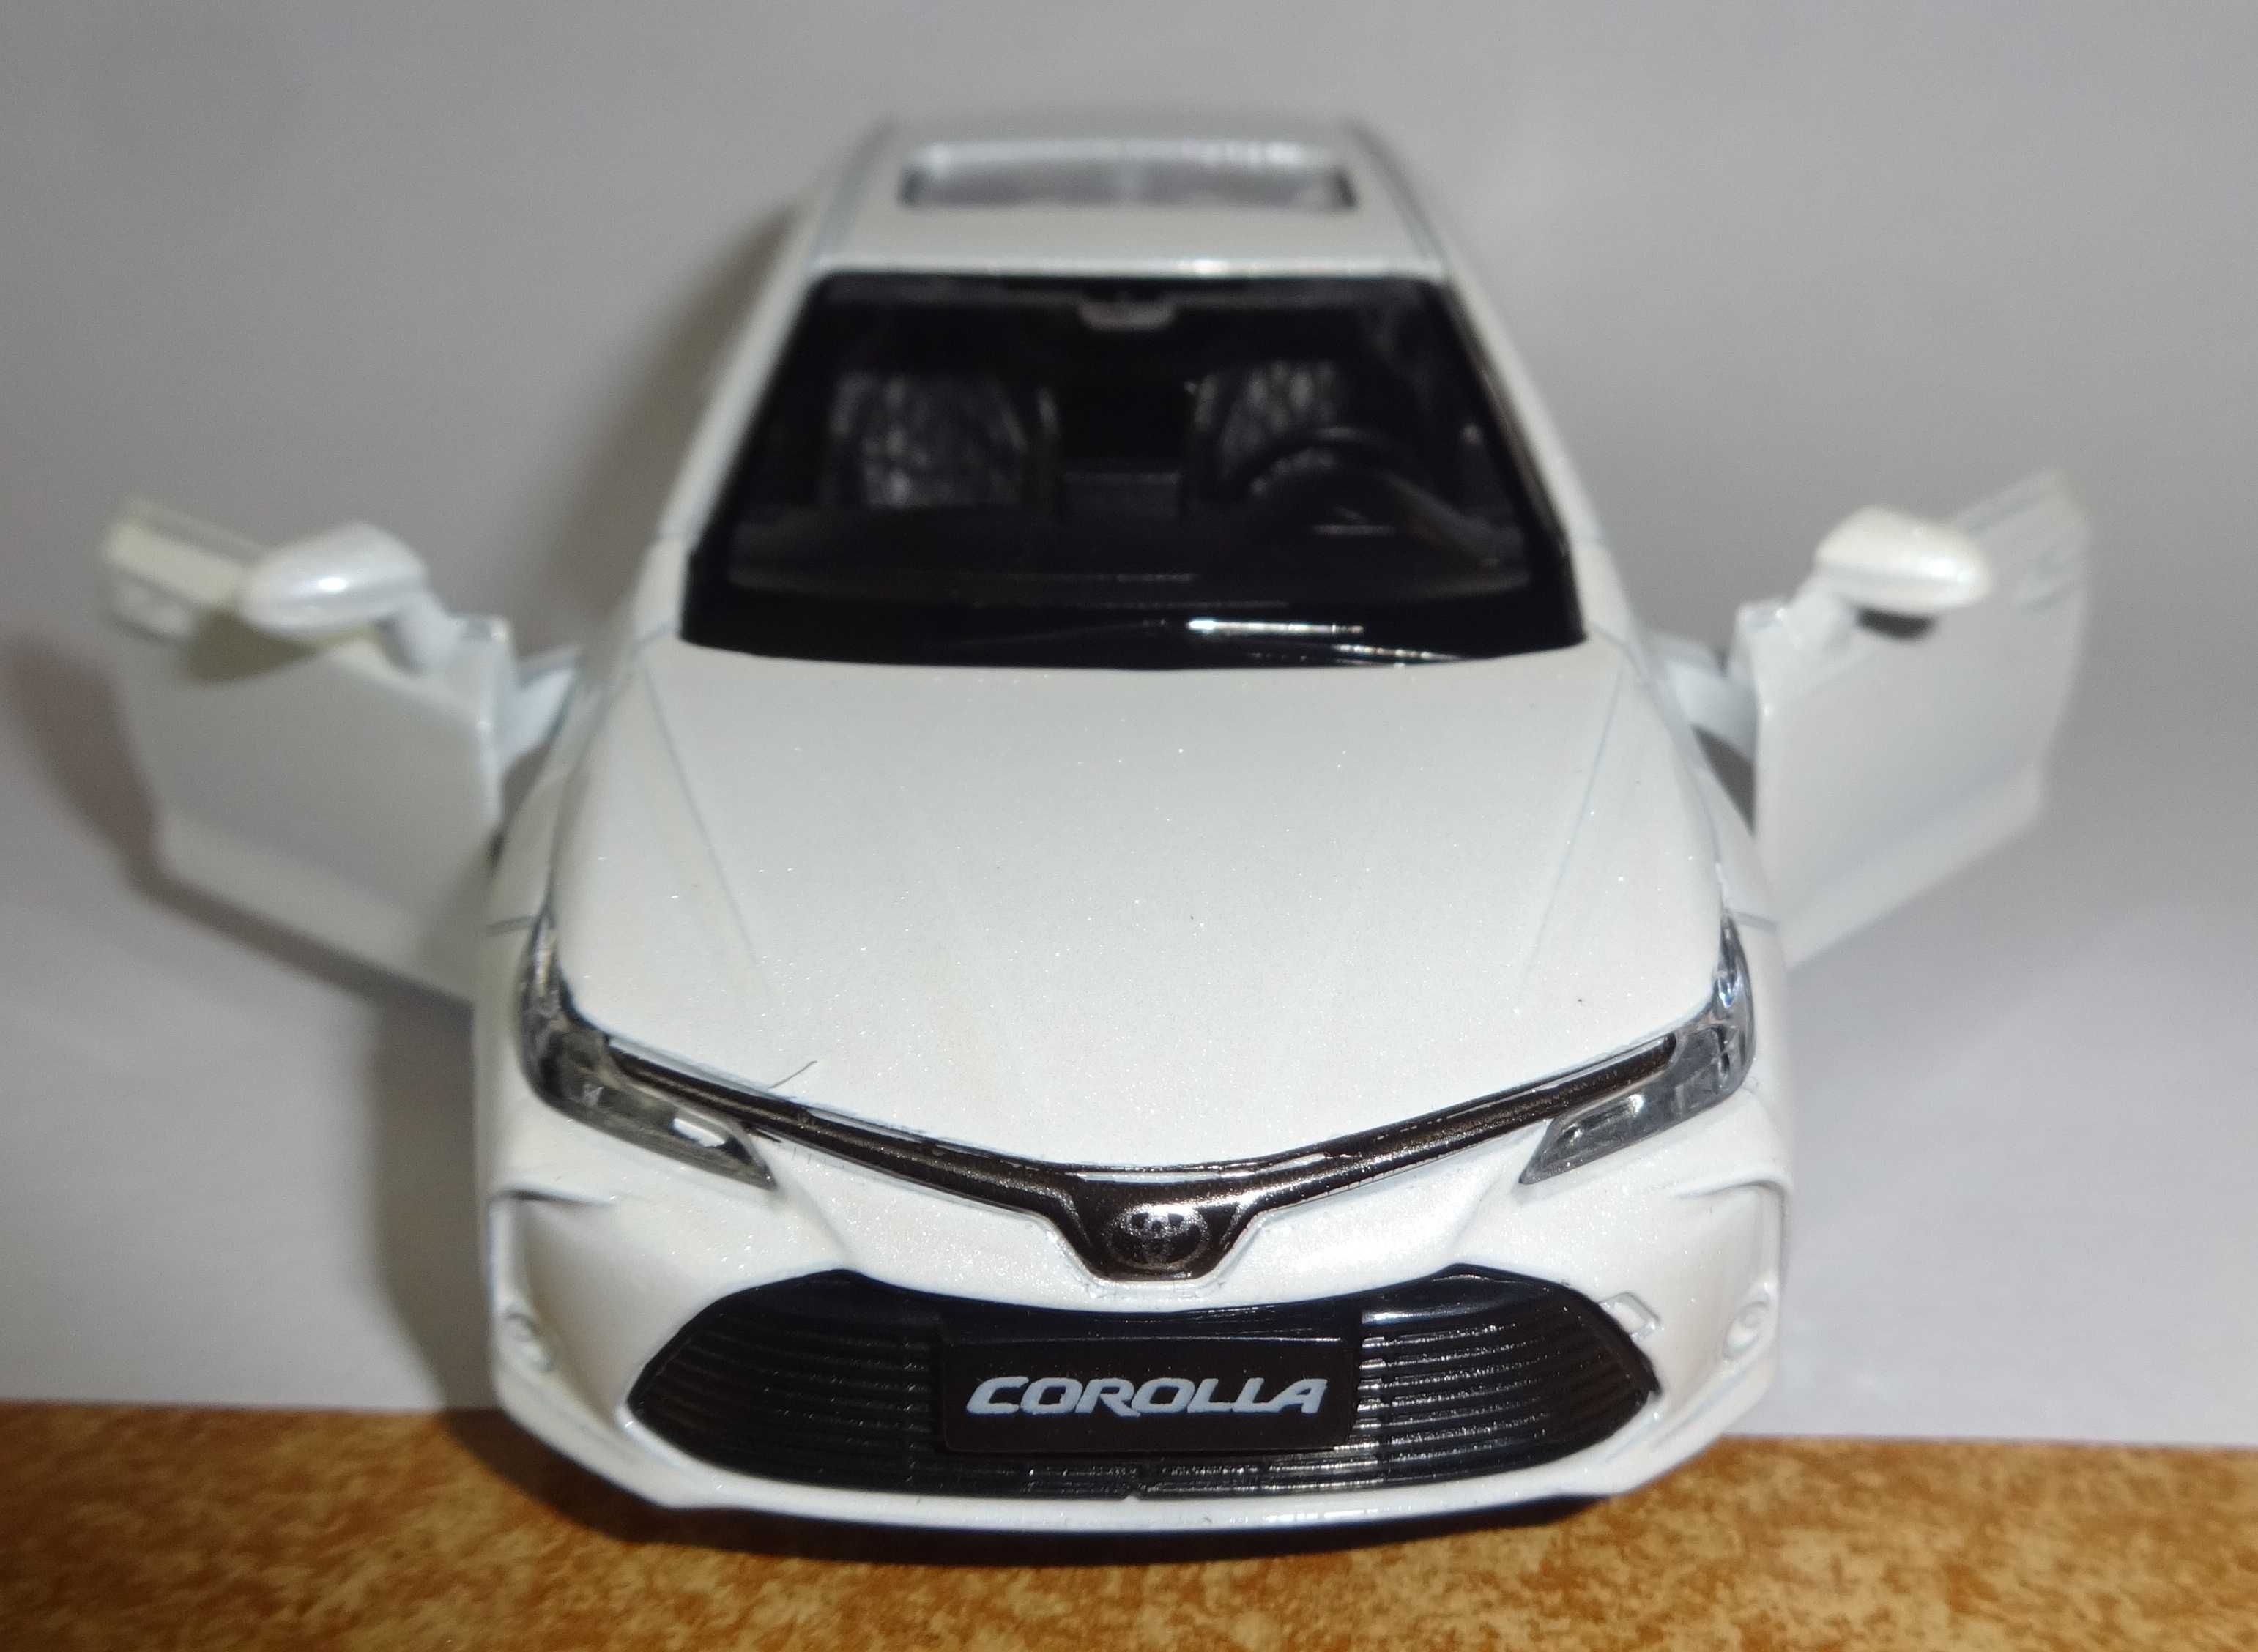 NOWY model Toyota Corolla Hybrid Sedan w skali 1:43 1/43.